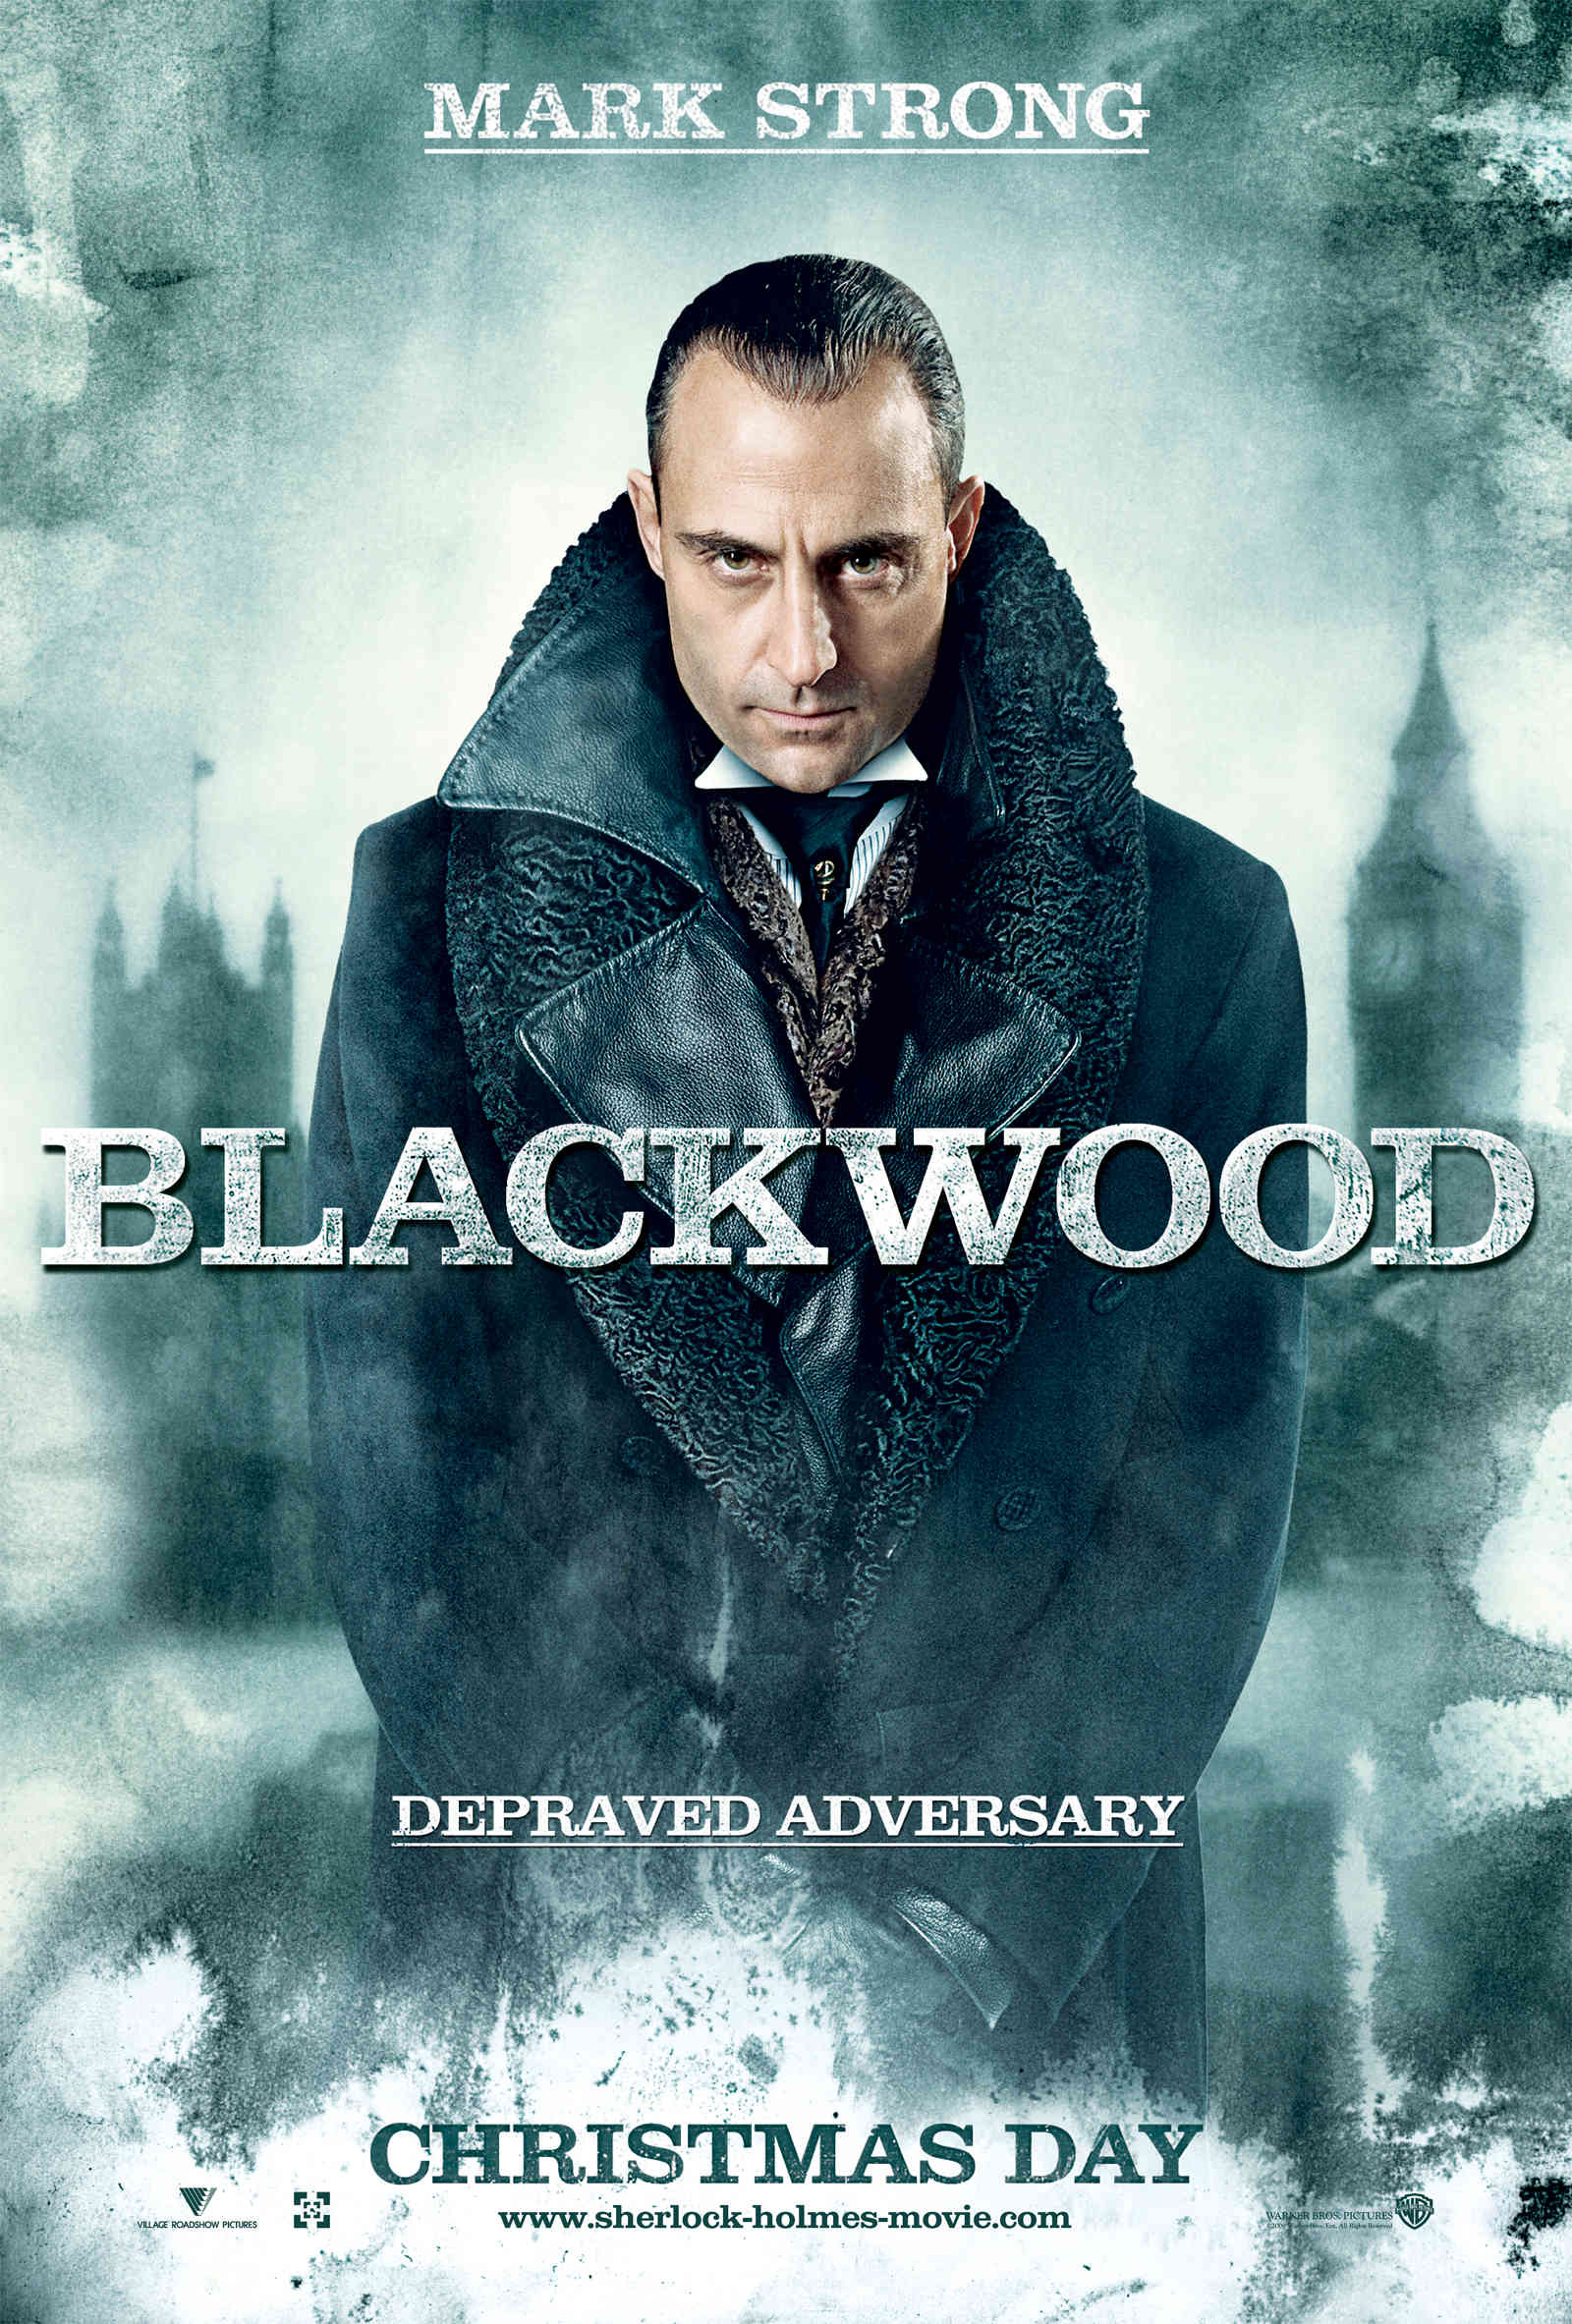 Poster of Sherlock Holmes (2009)